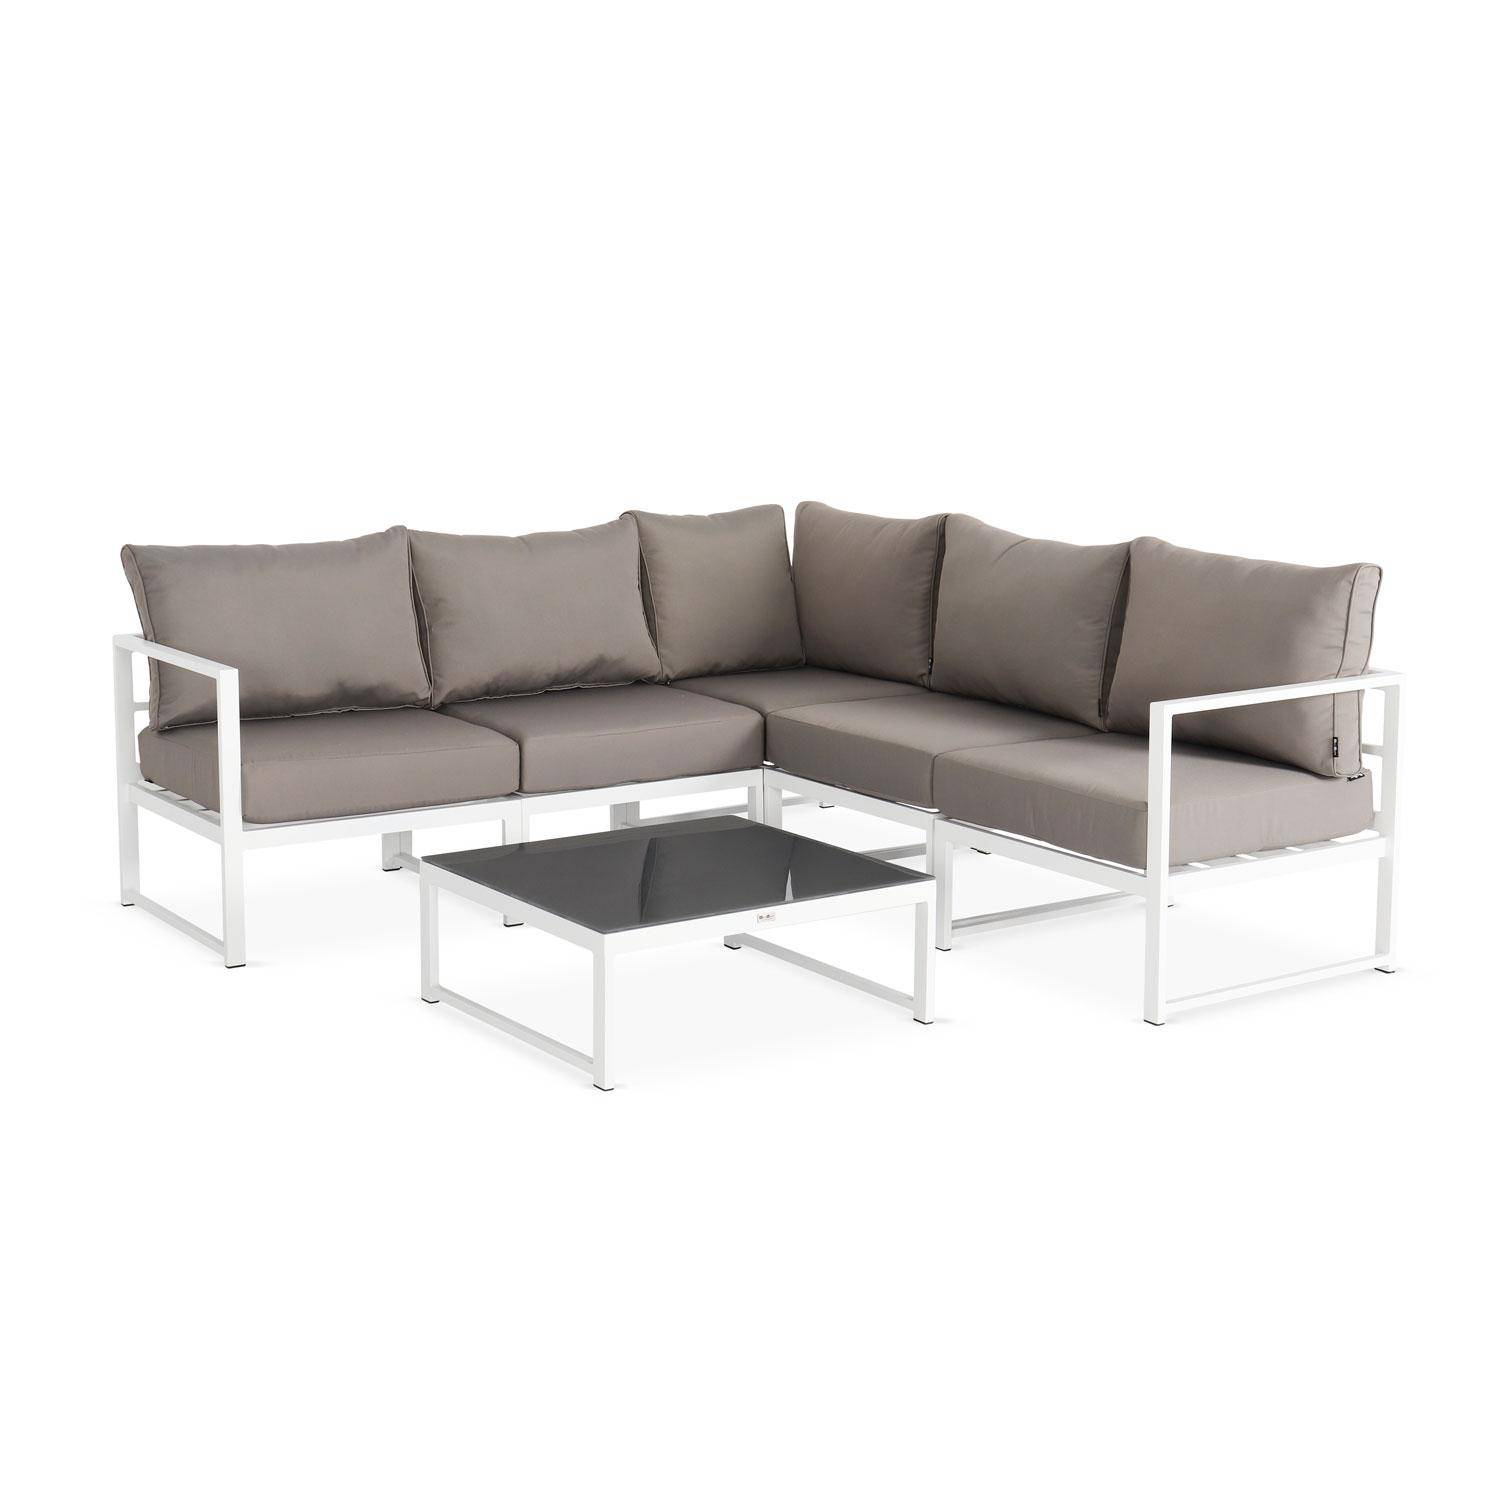 5-seater garden sofa set - Stratum - Anthracite frame, Beige-brown cushions, 6 pieces in aluminium, thick cushions, modular design - Stratum - White/Beige-brown Photo2